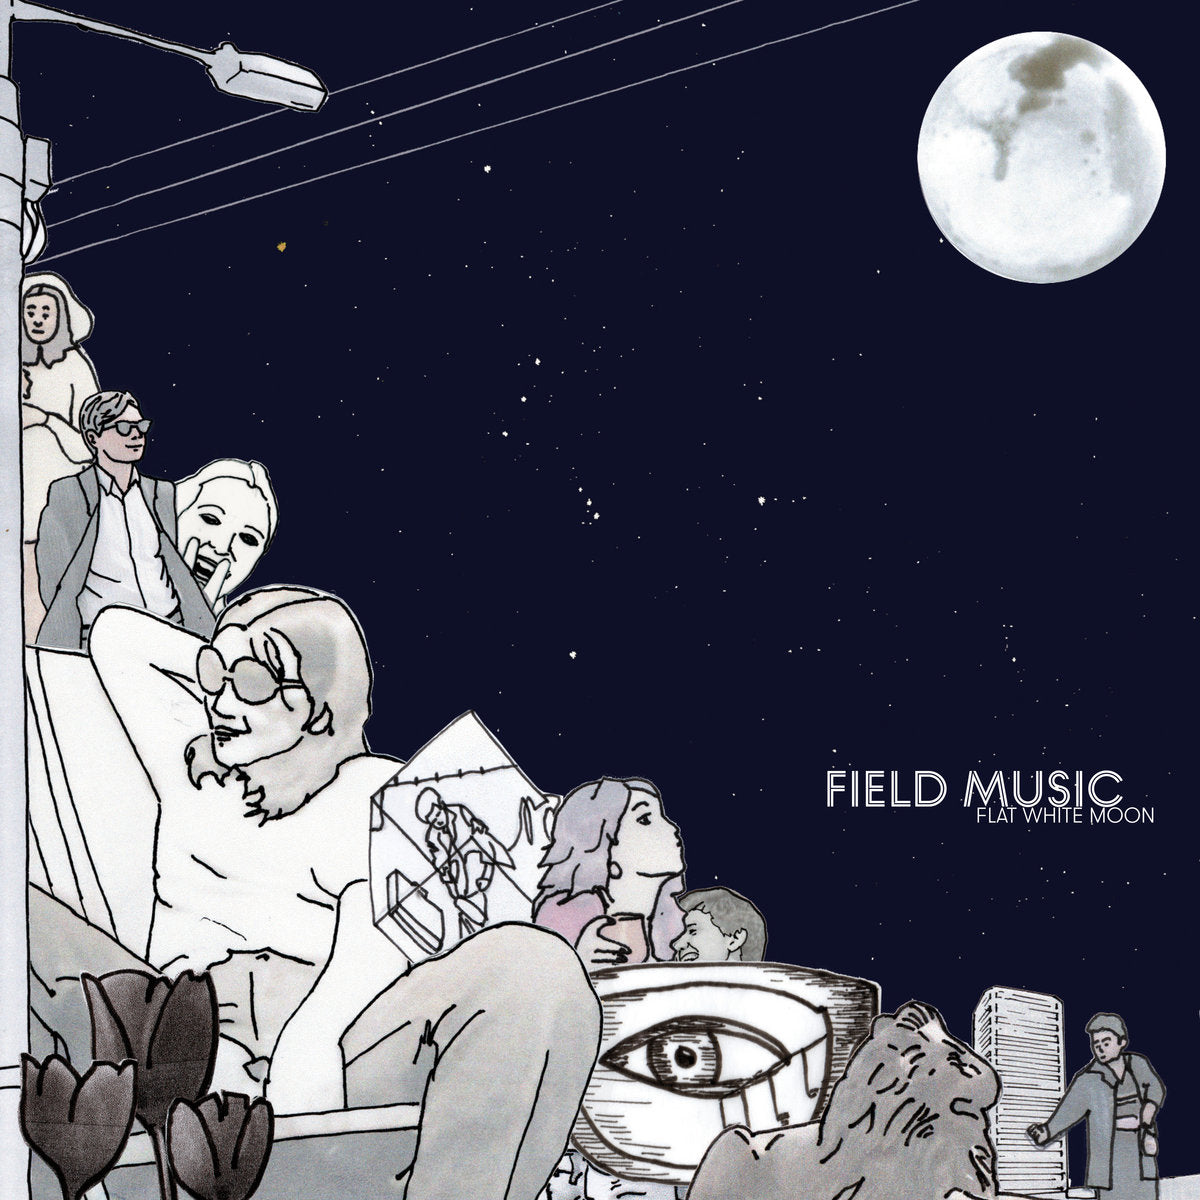 FIELD MUSIC - FLAT WHITE MOON Vinyl LP